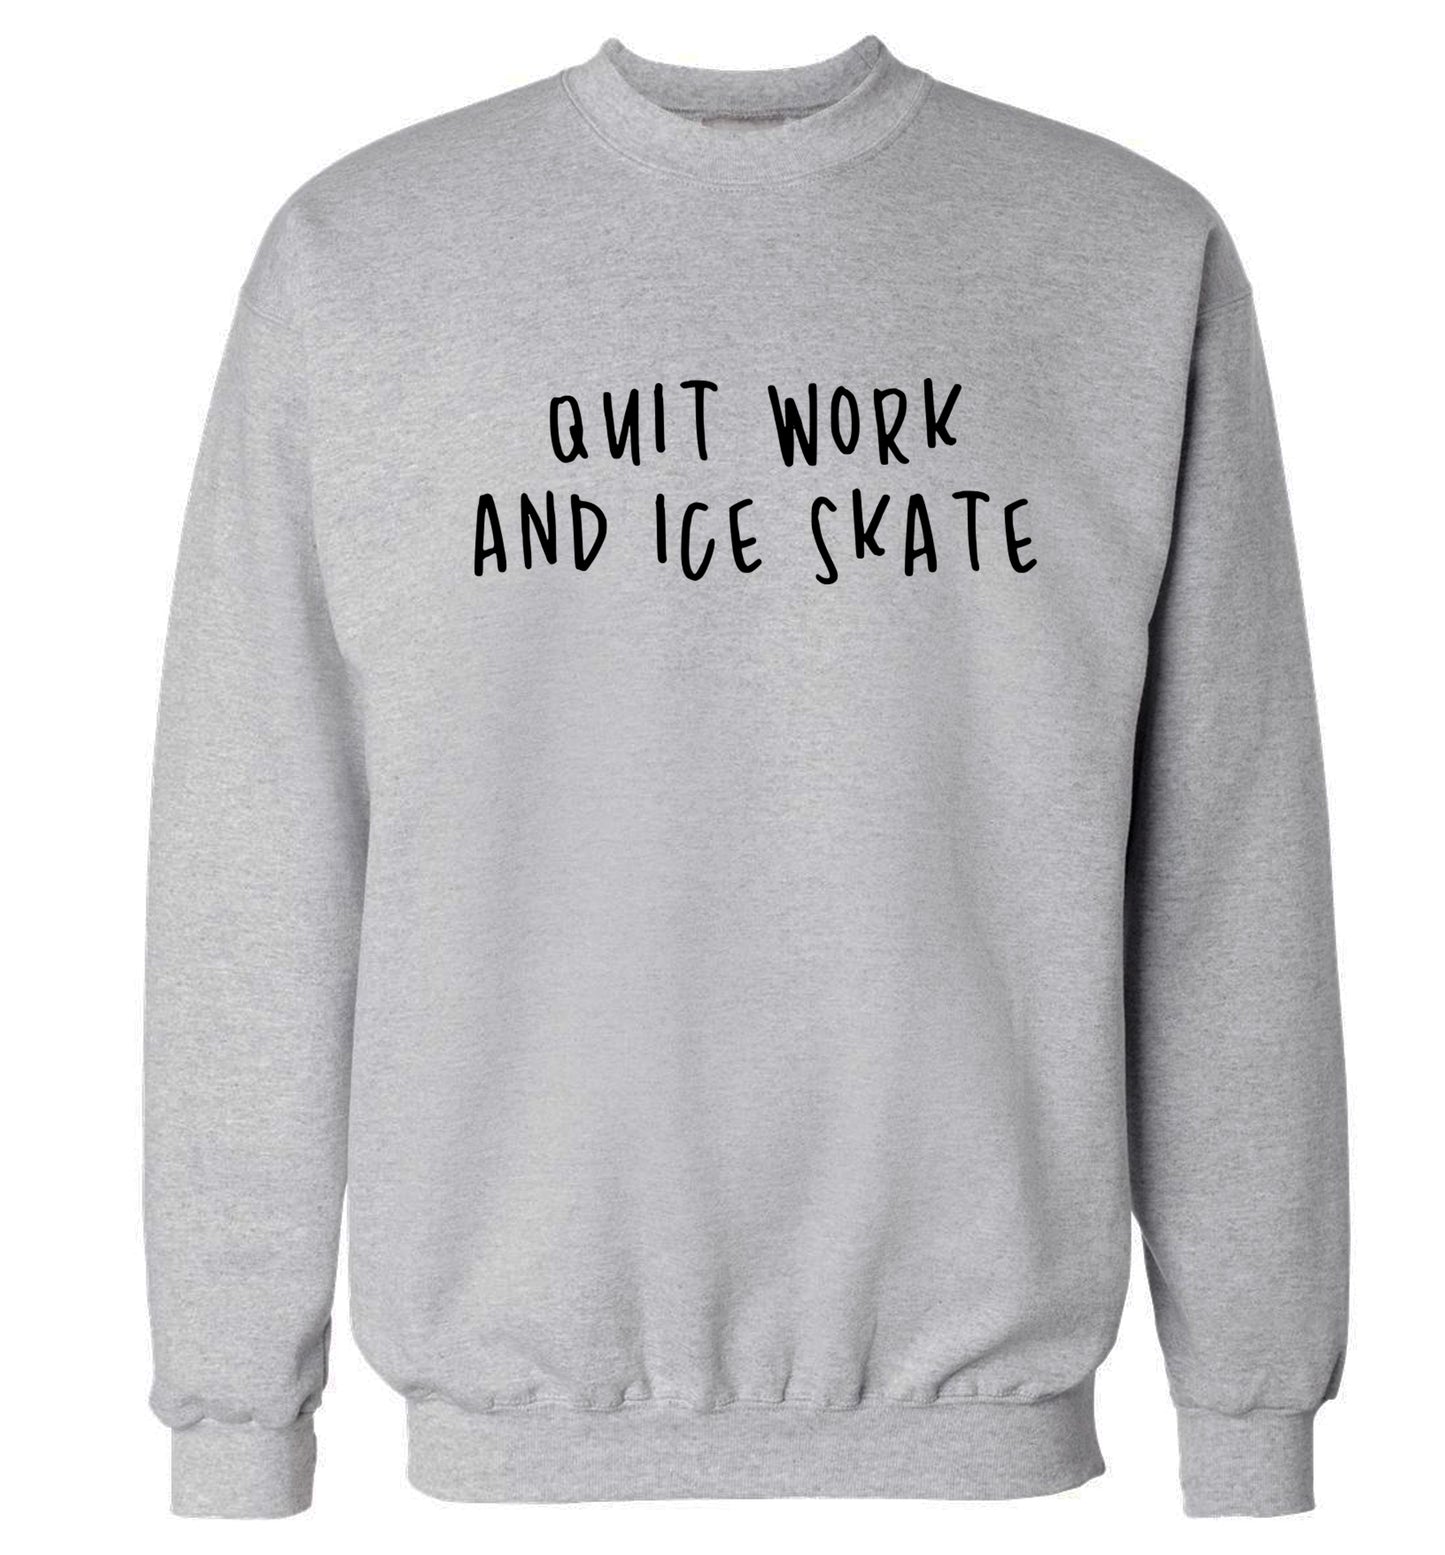 Quit work ice skate Adult's unisexgrey Sweater 2XL